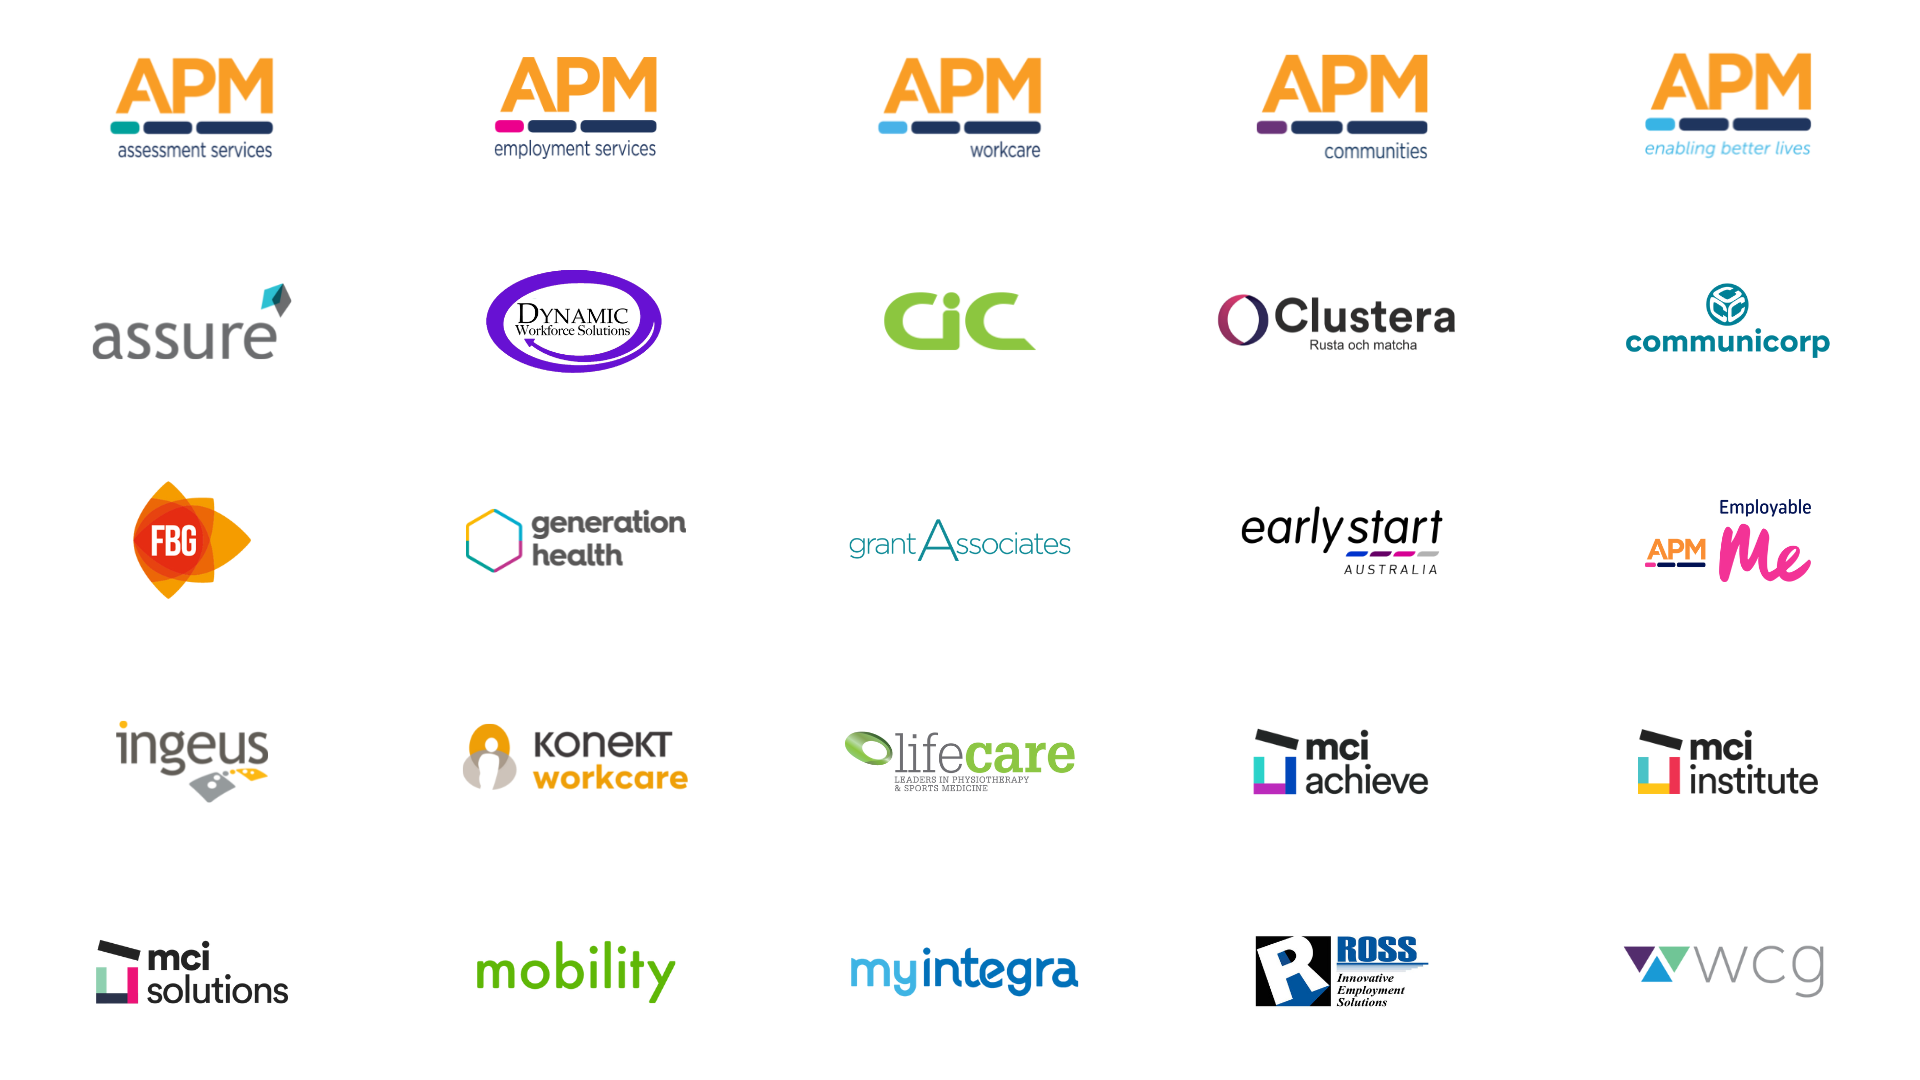 APM's brands across the world in logos